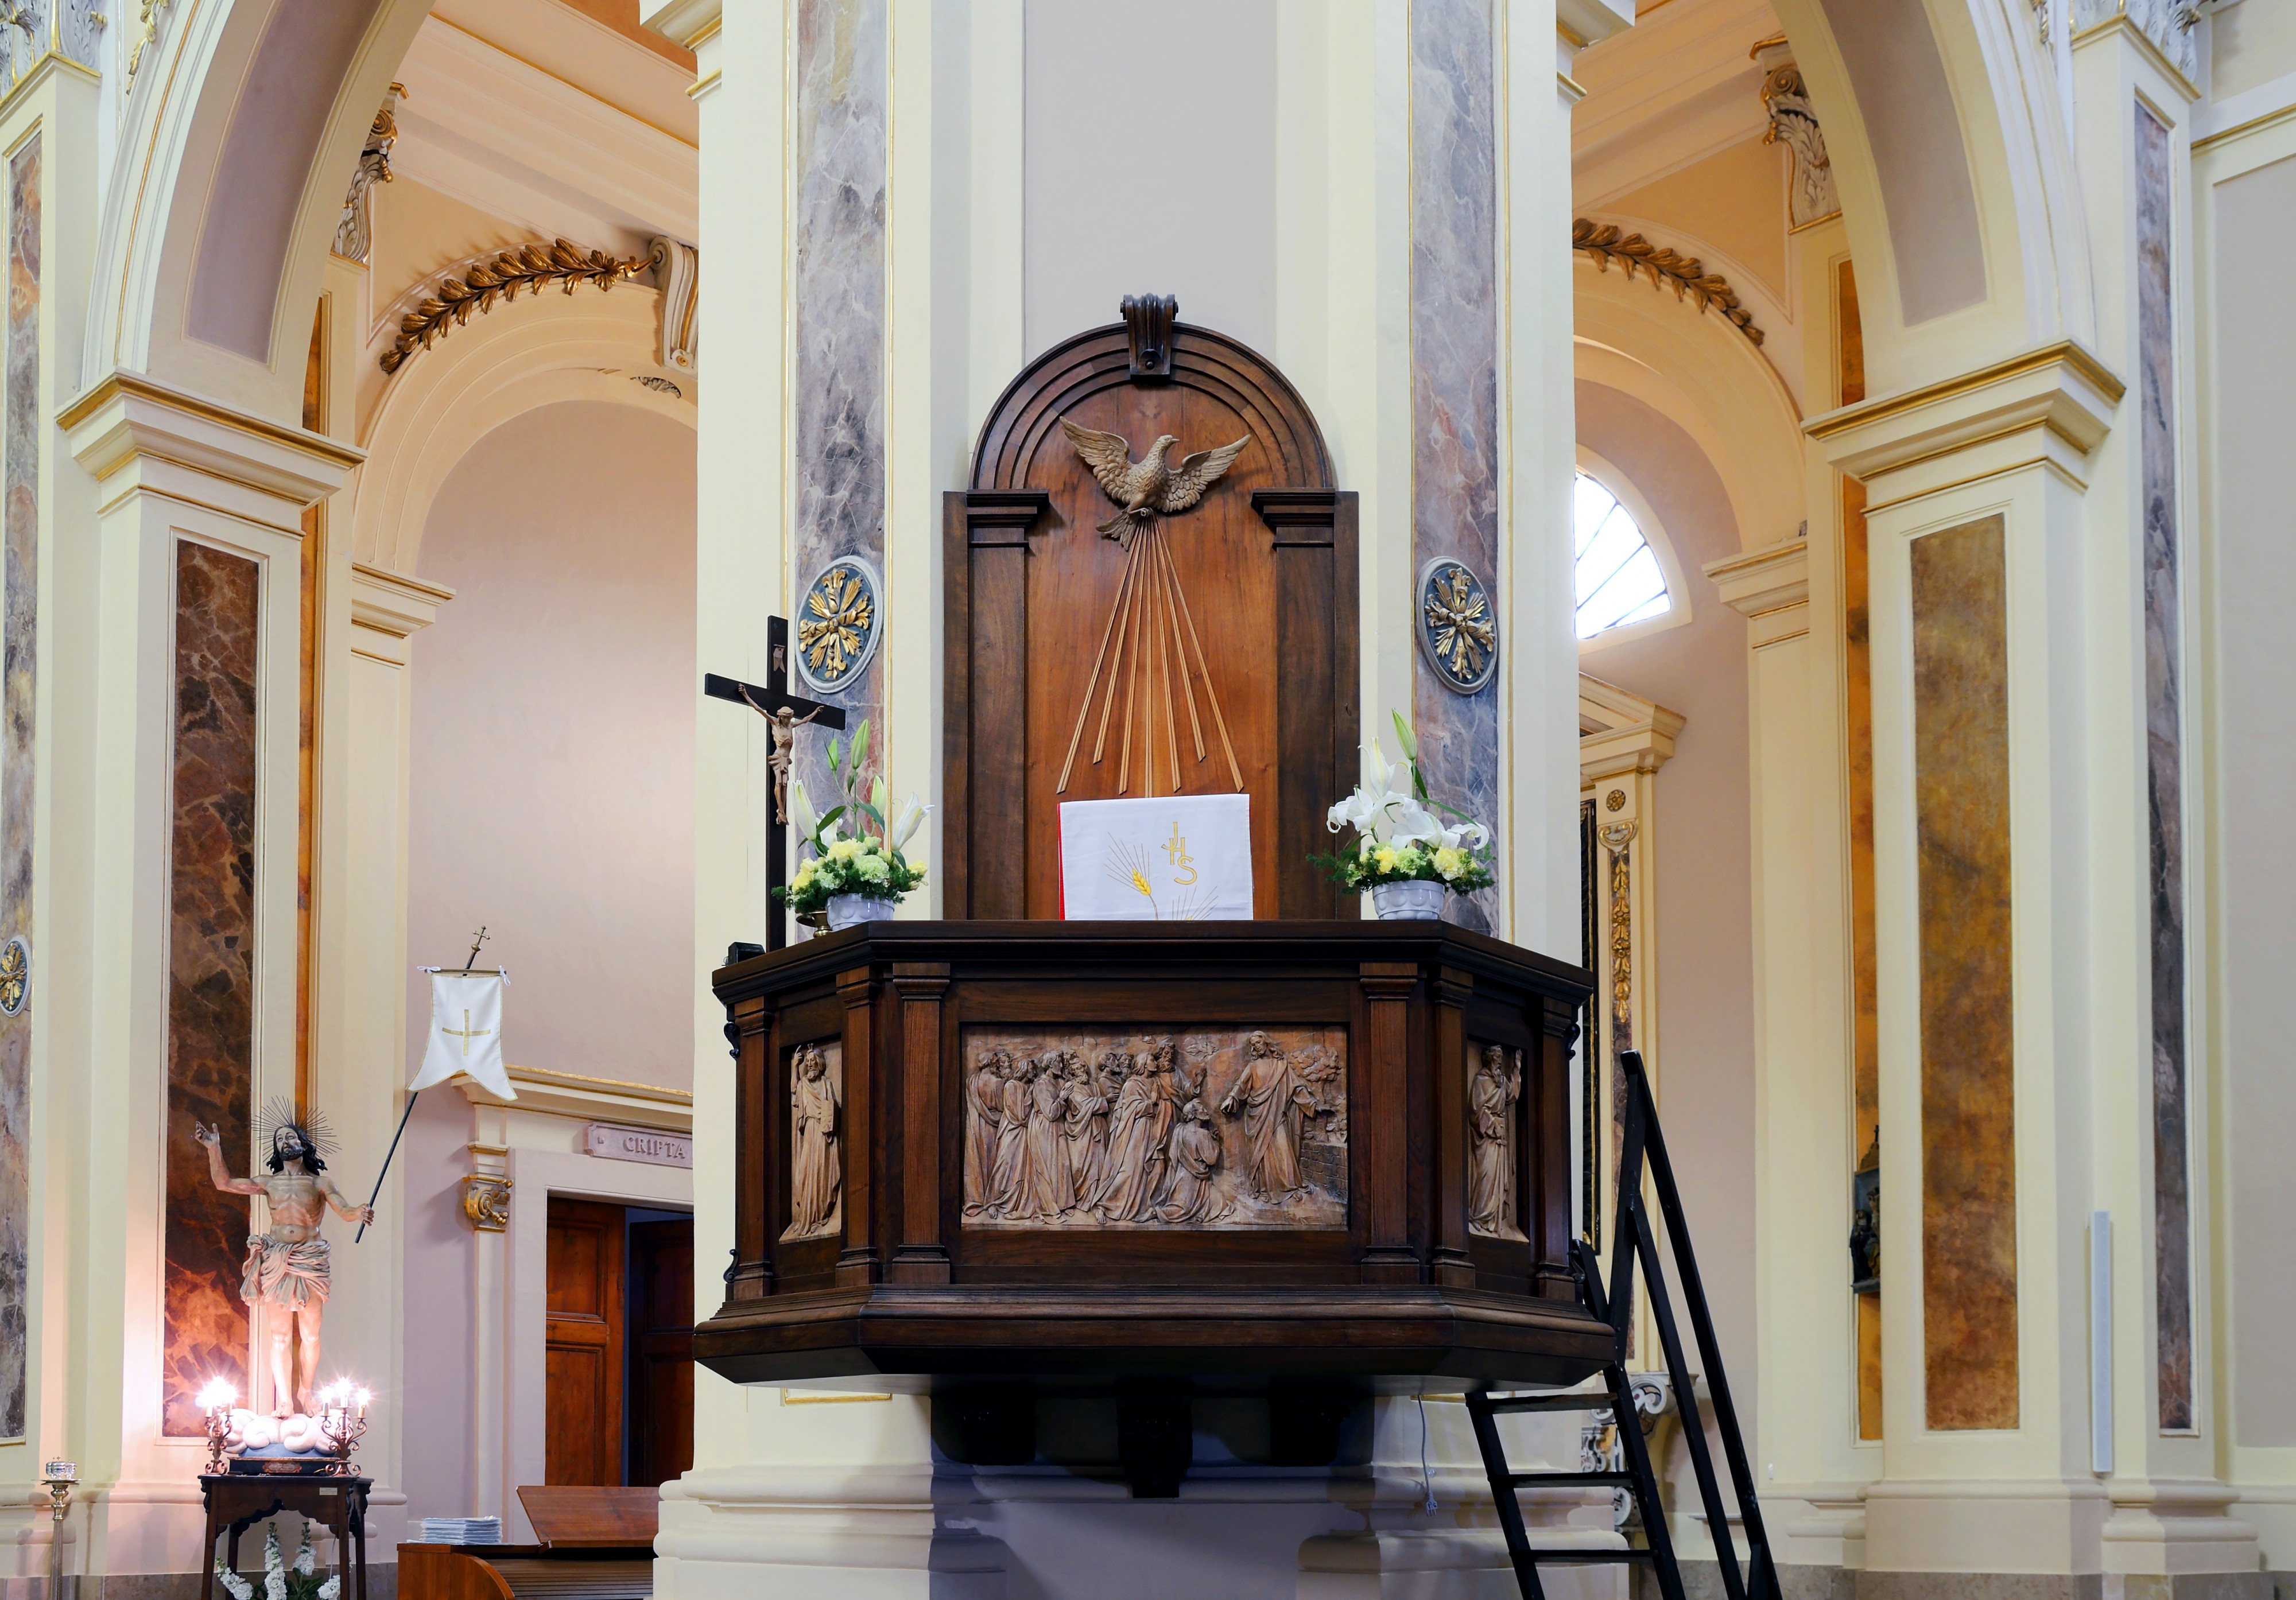 Pulpit of St. George in Locorotondo